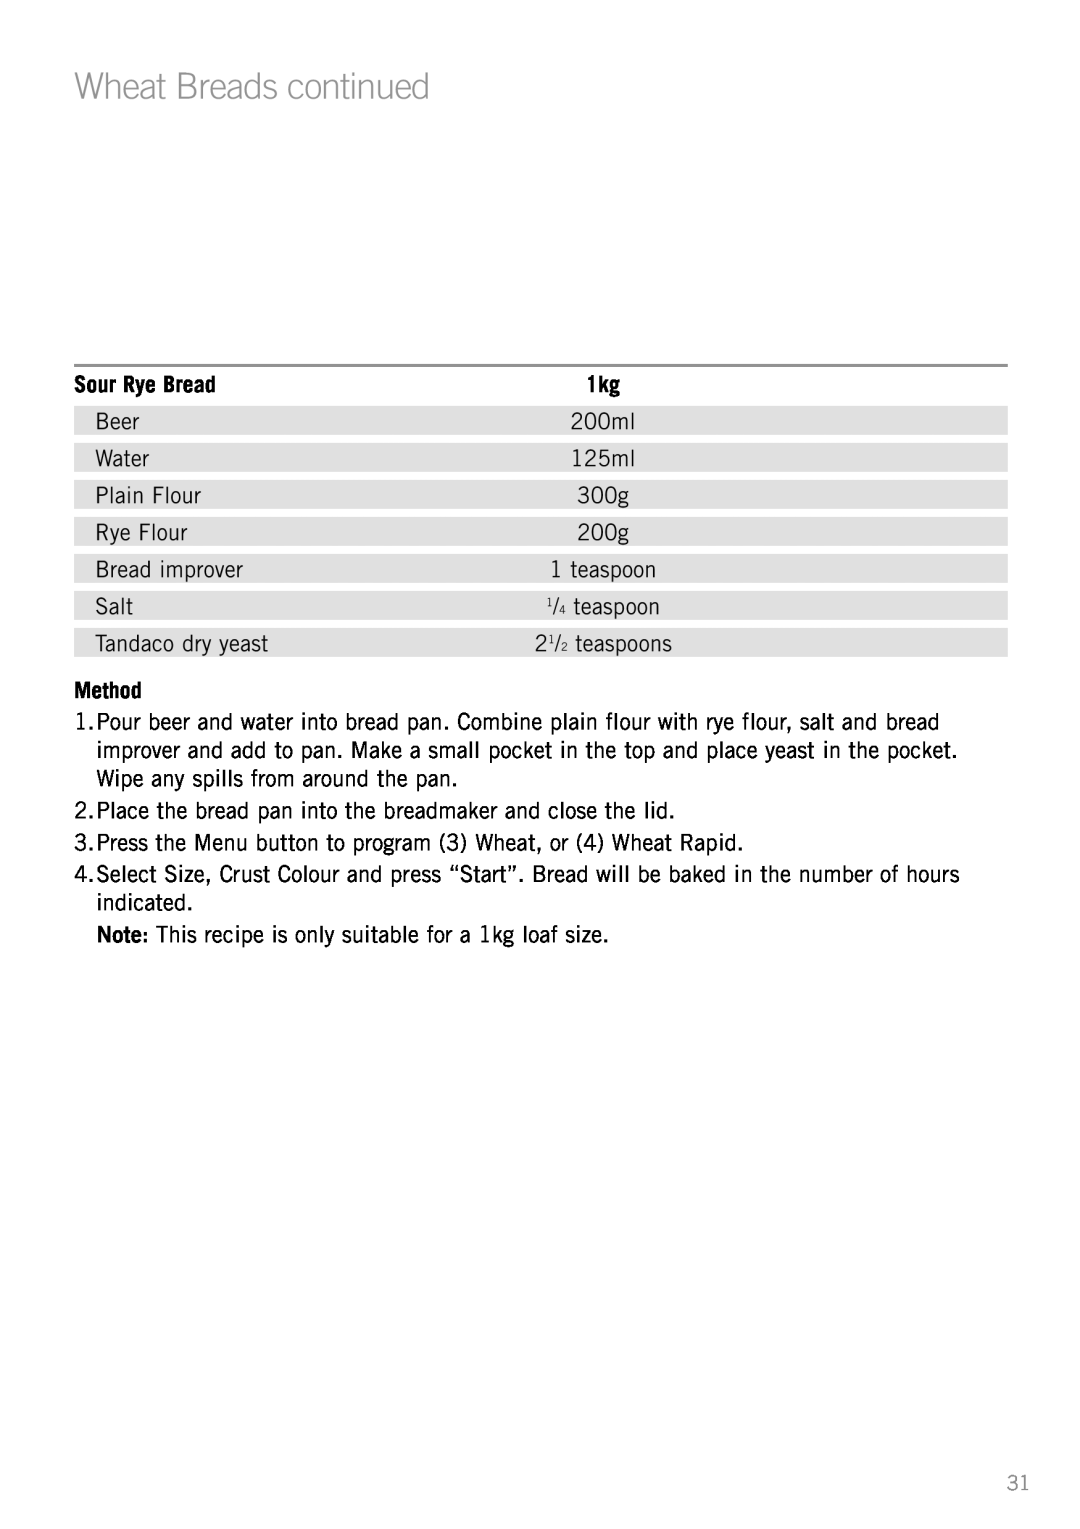 Sunbeam BM3500 manual Sour Rye Bread, Wheat Breads continued, Method 